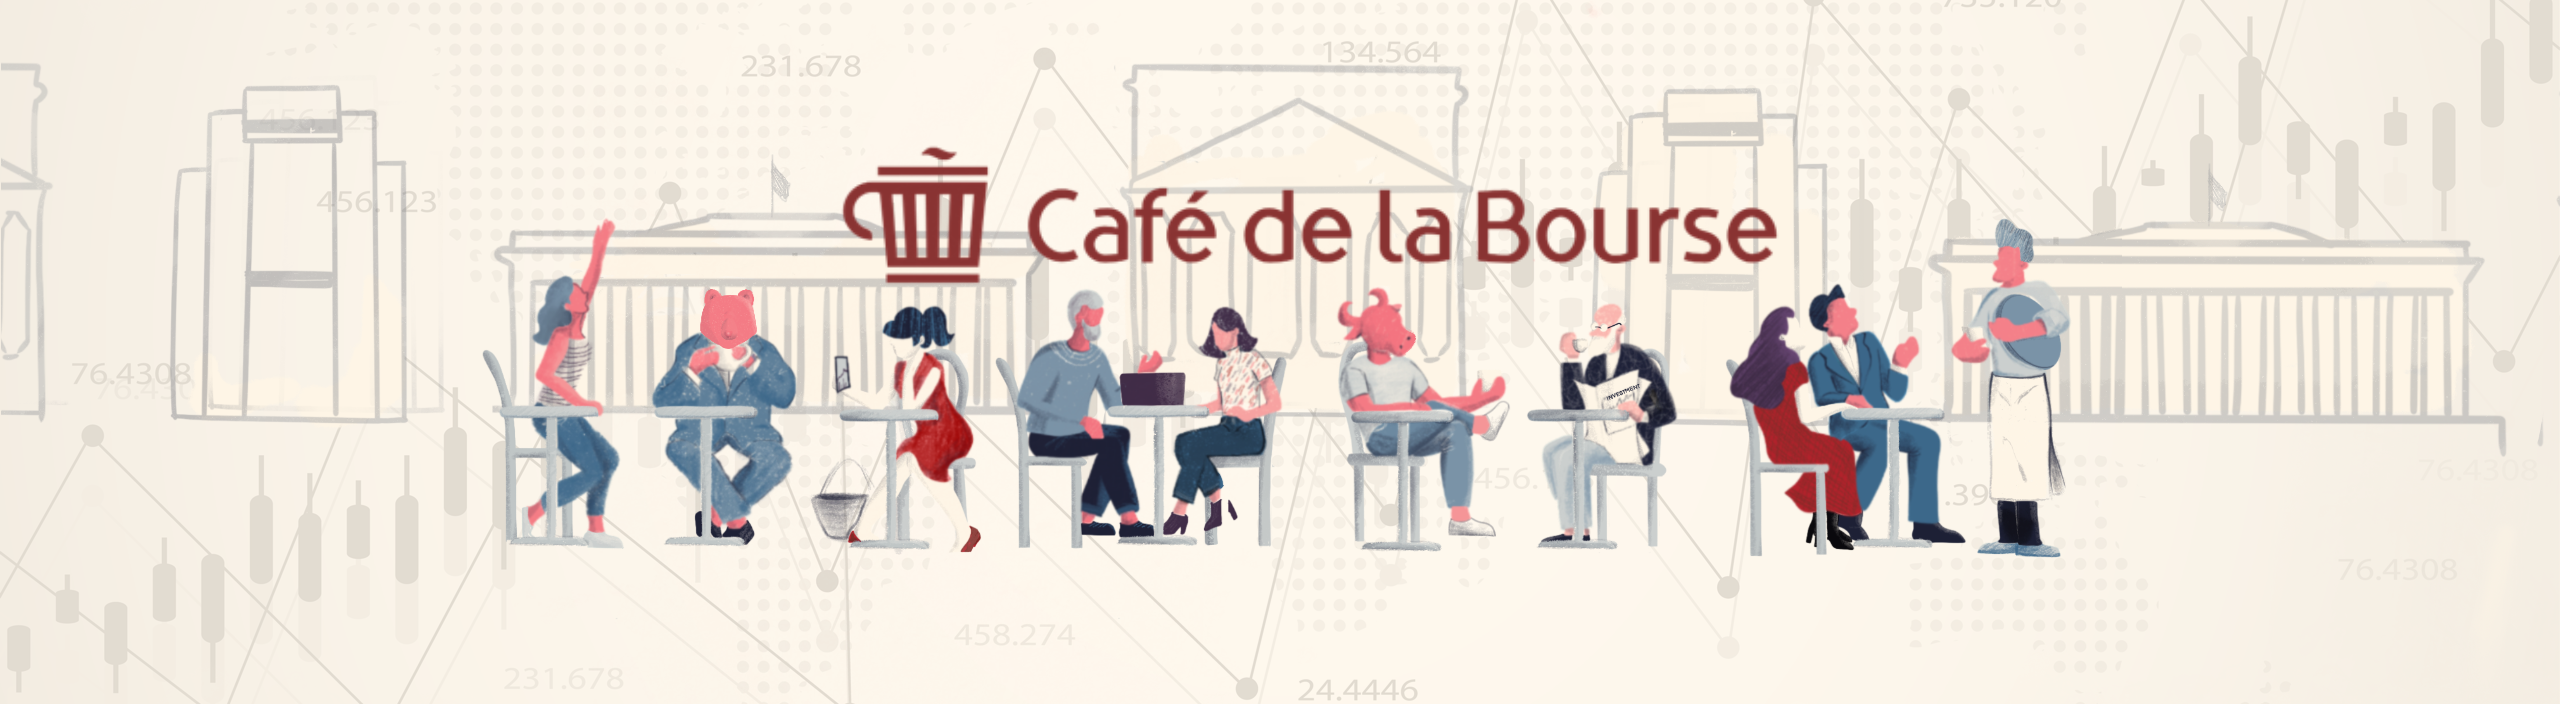 Cafe de la bourse newsletter